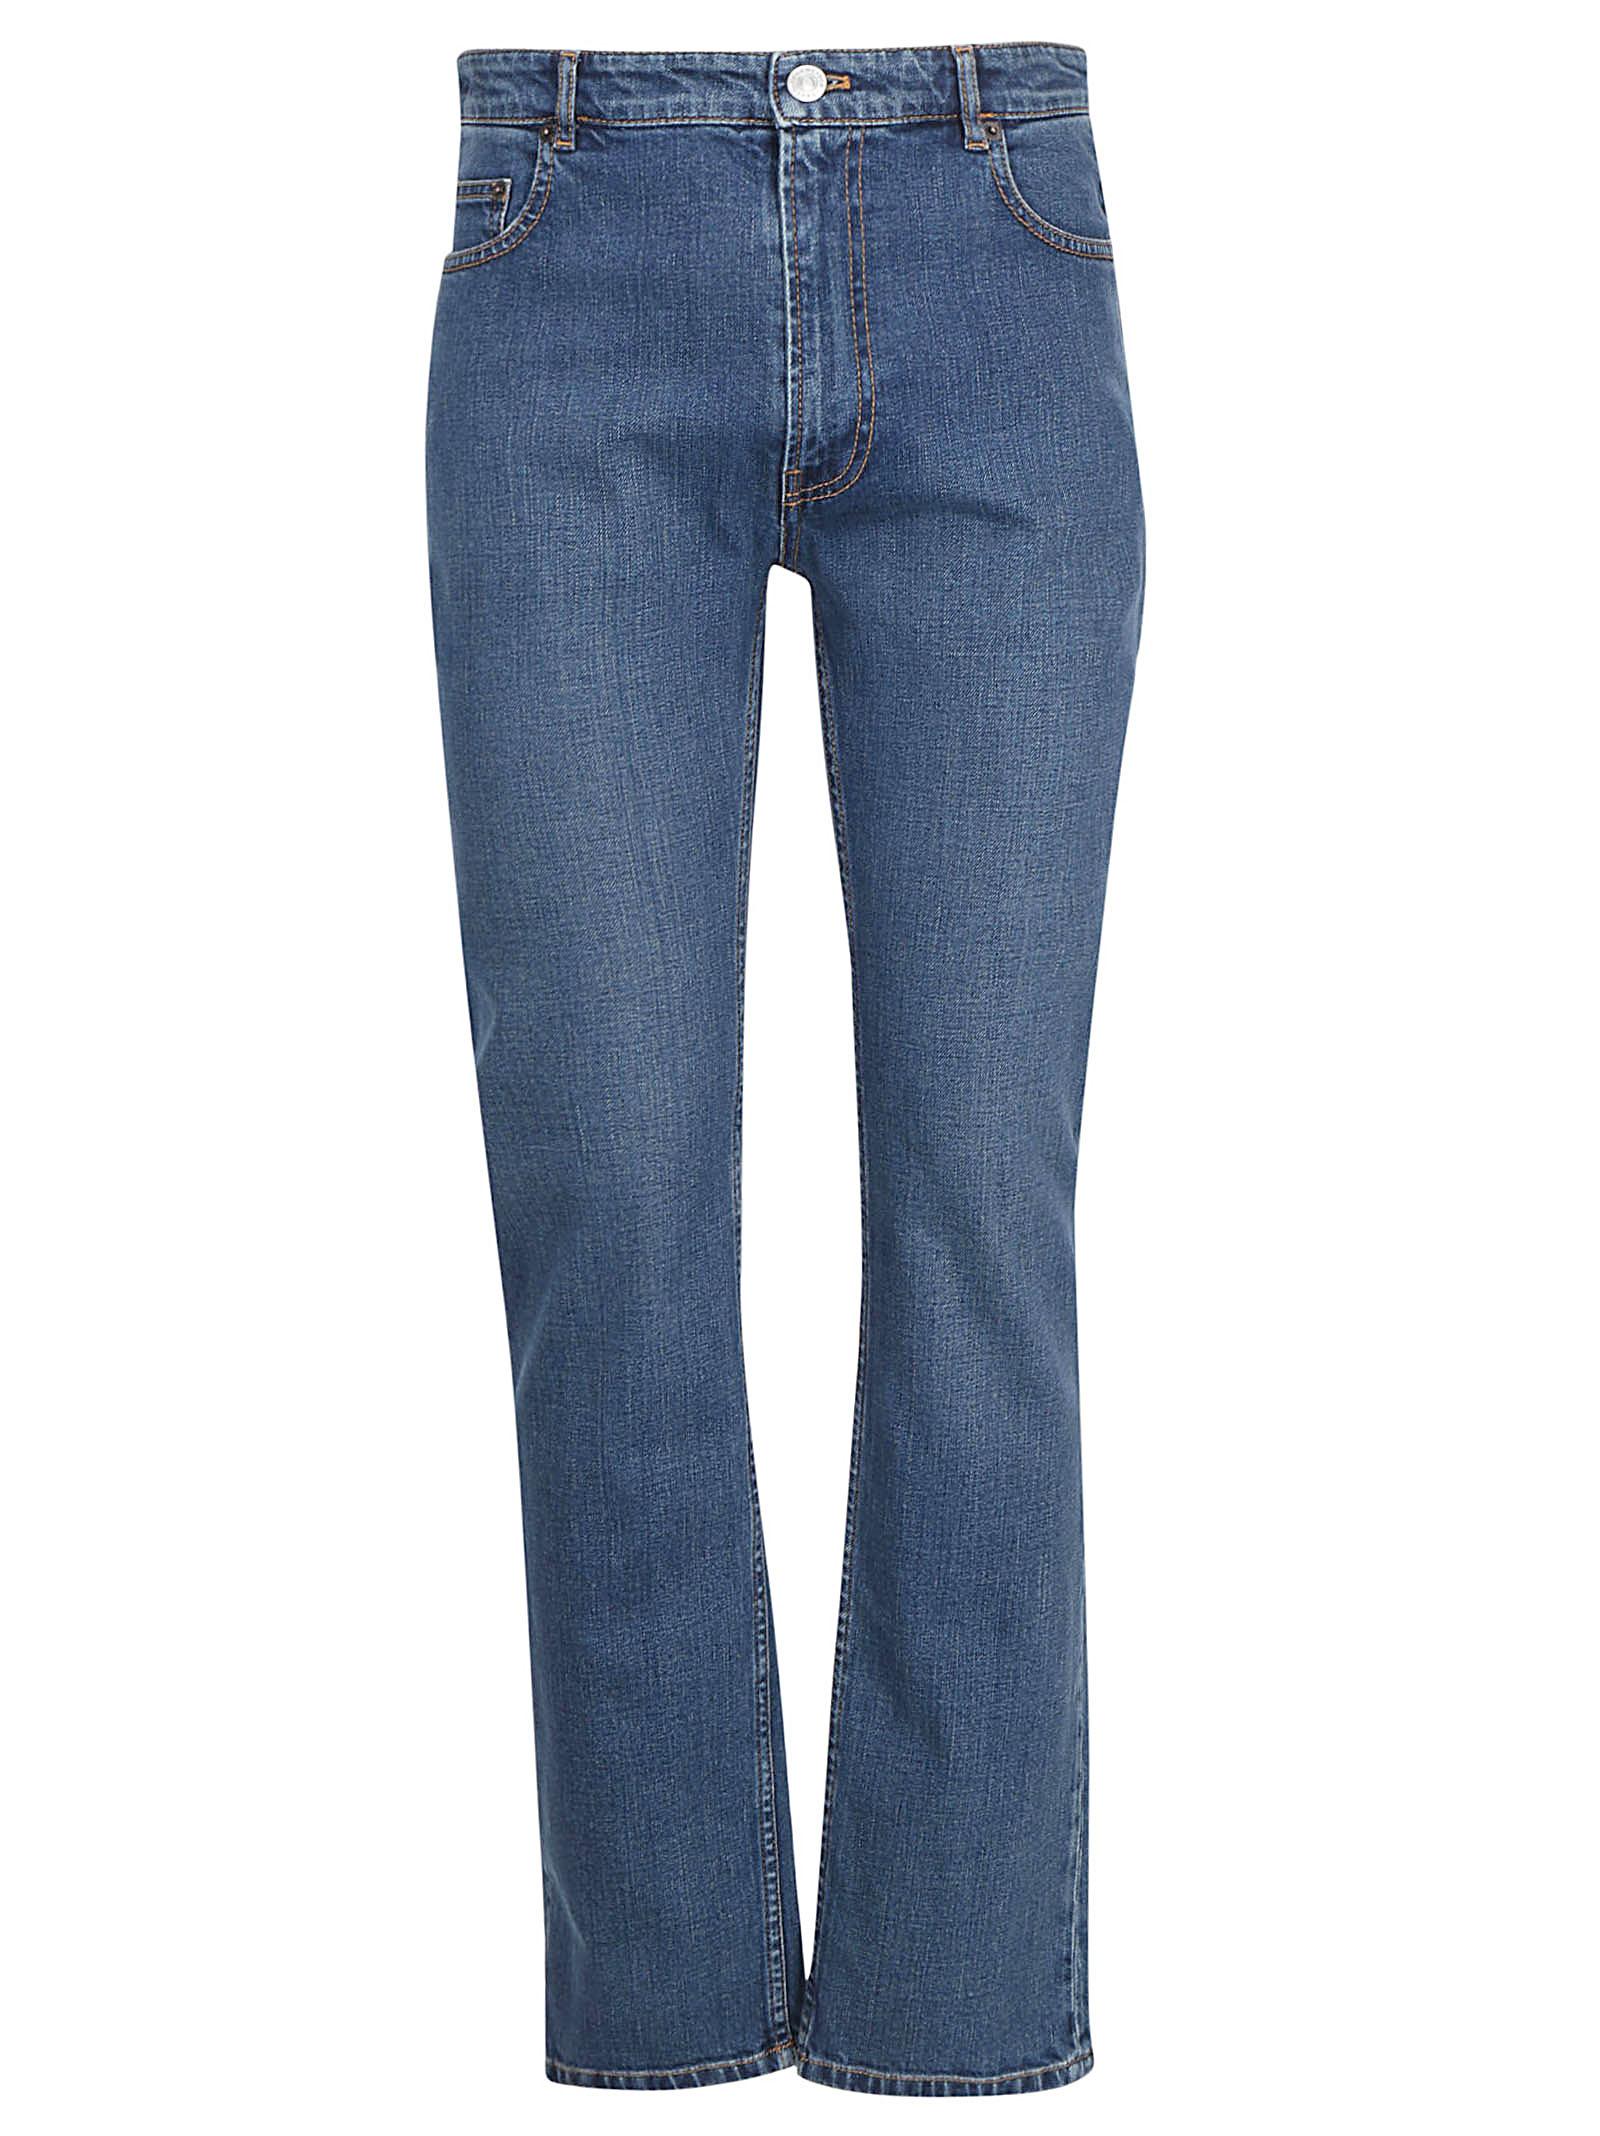 Balenciaga Denim Skinny Fit Jeans in Blue for Men - Lyst